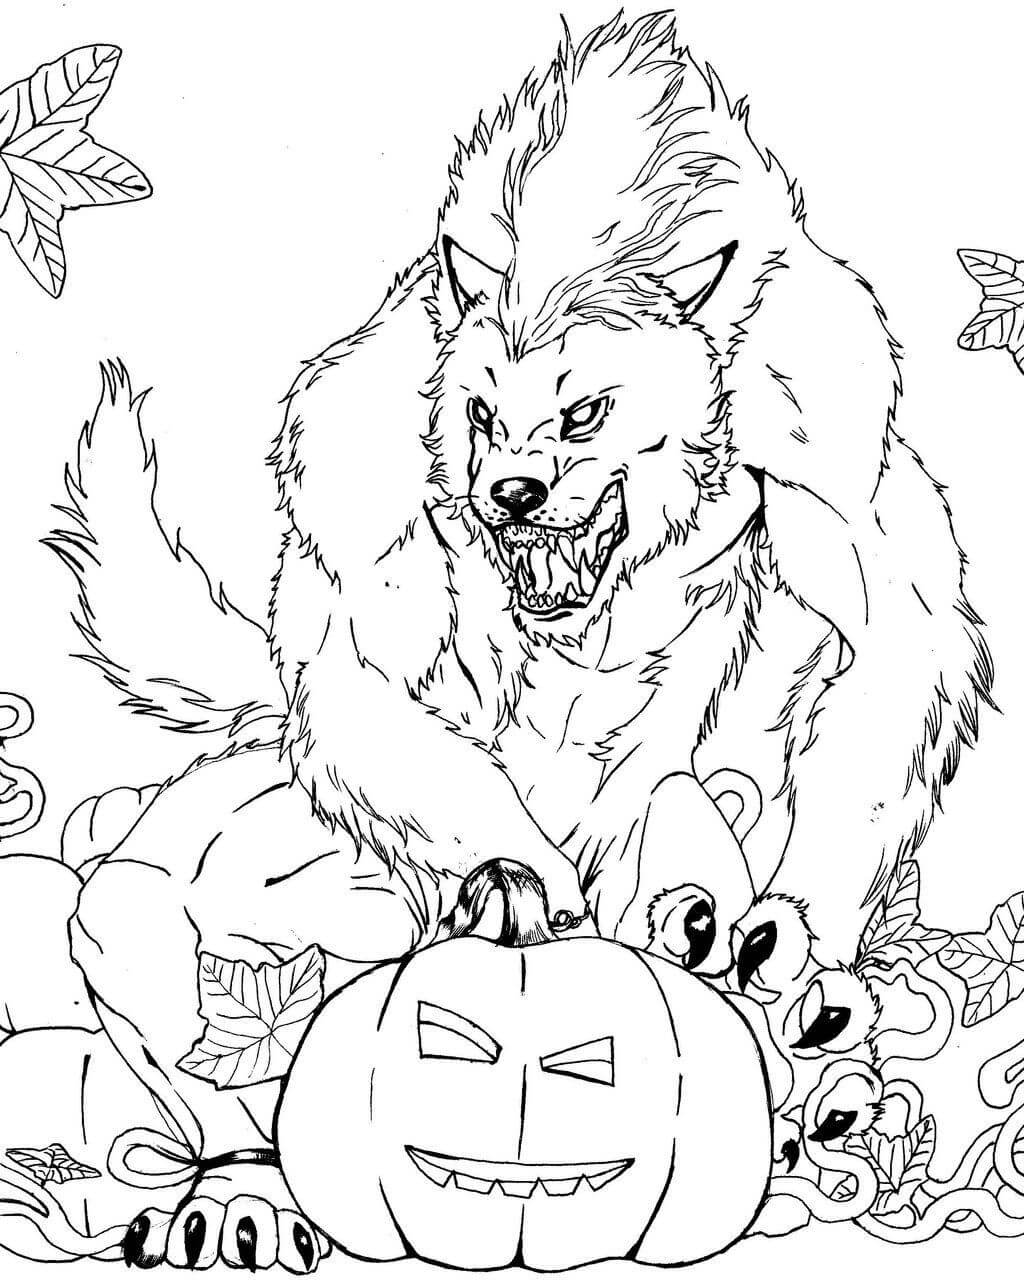 Loup-garou coloring page